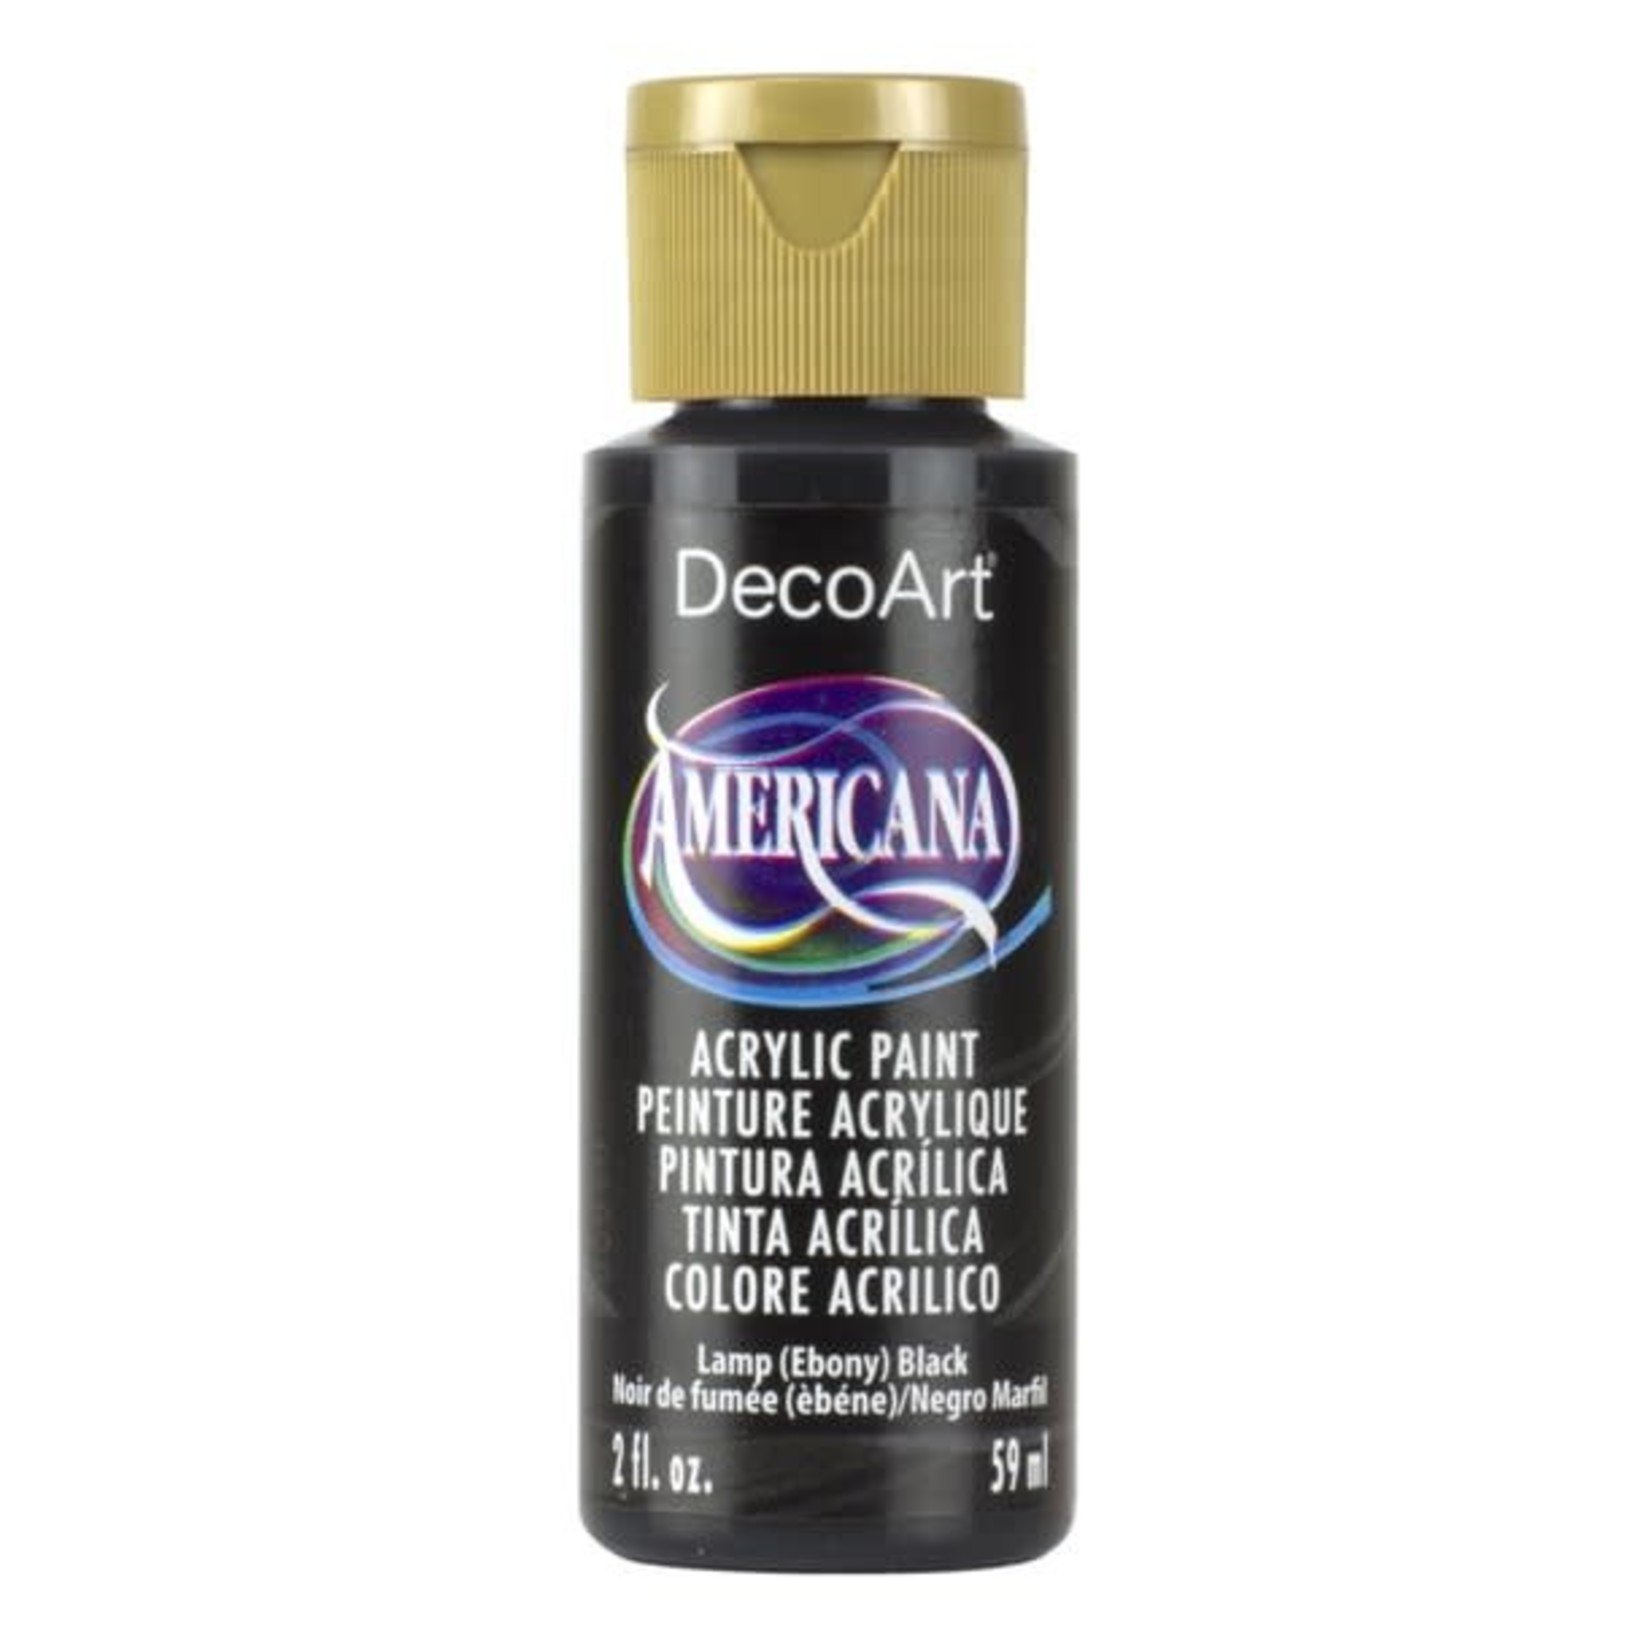 DecoArt Americana - Acrylic Paint - Lamp (Ebony) Black